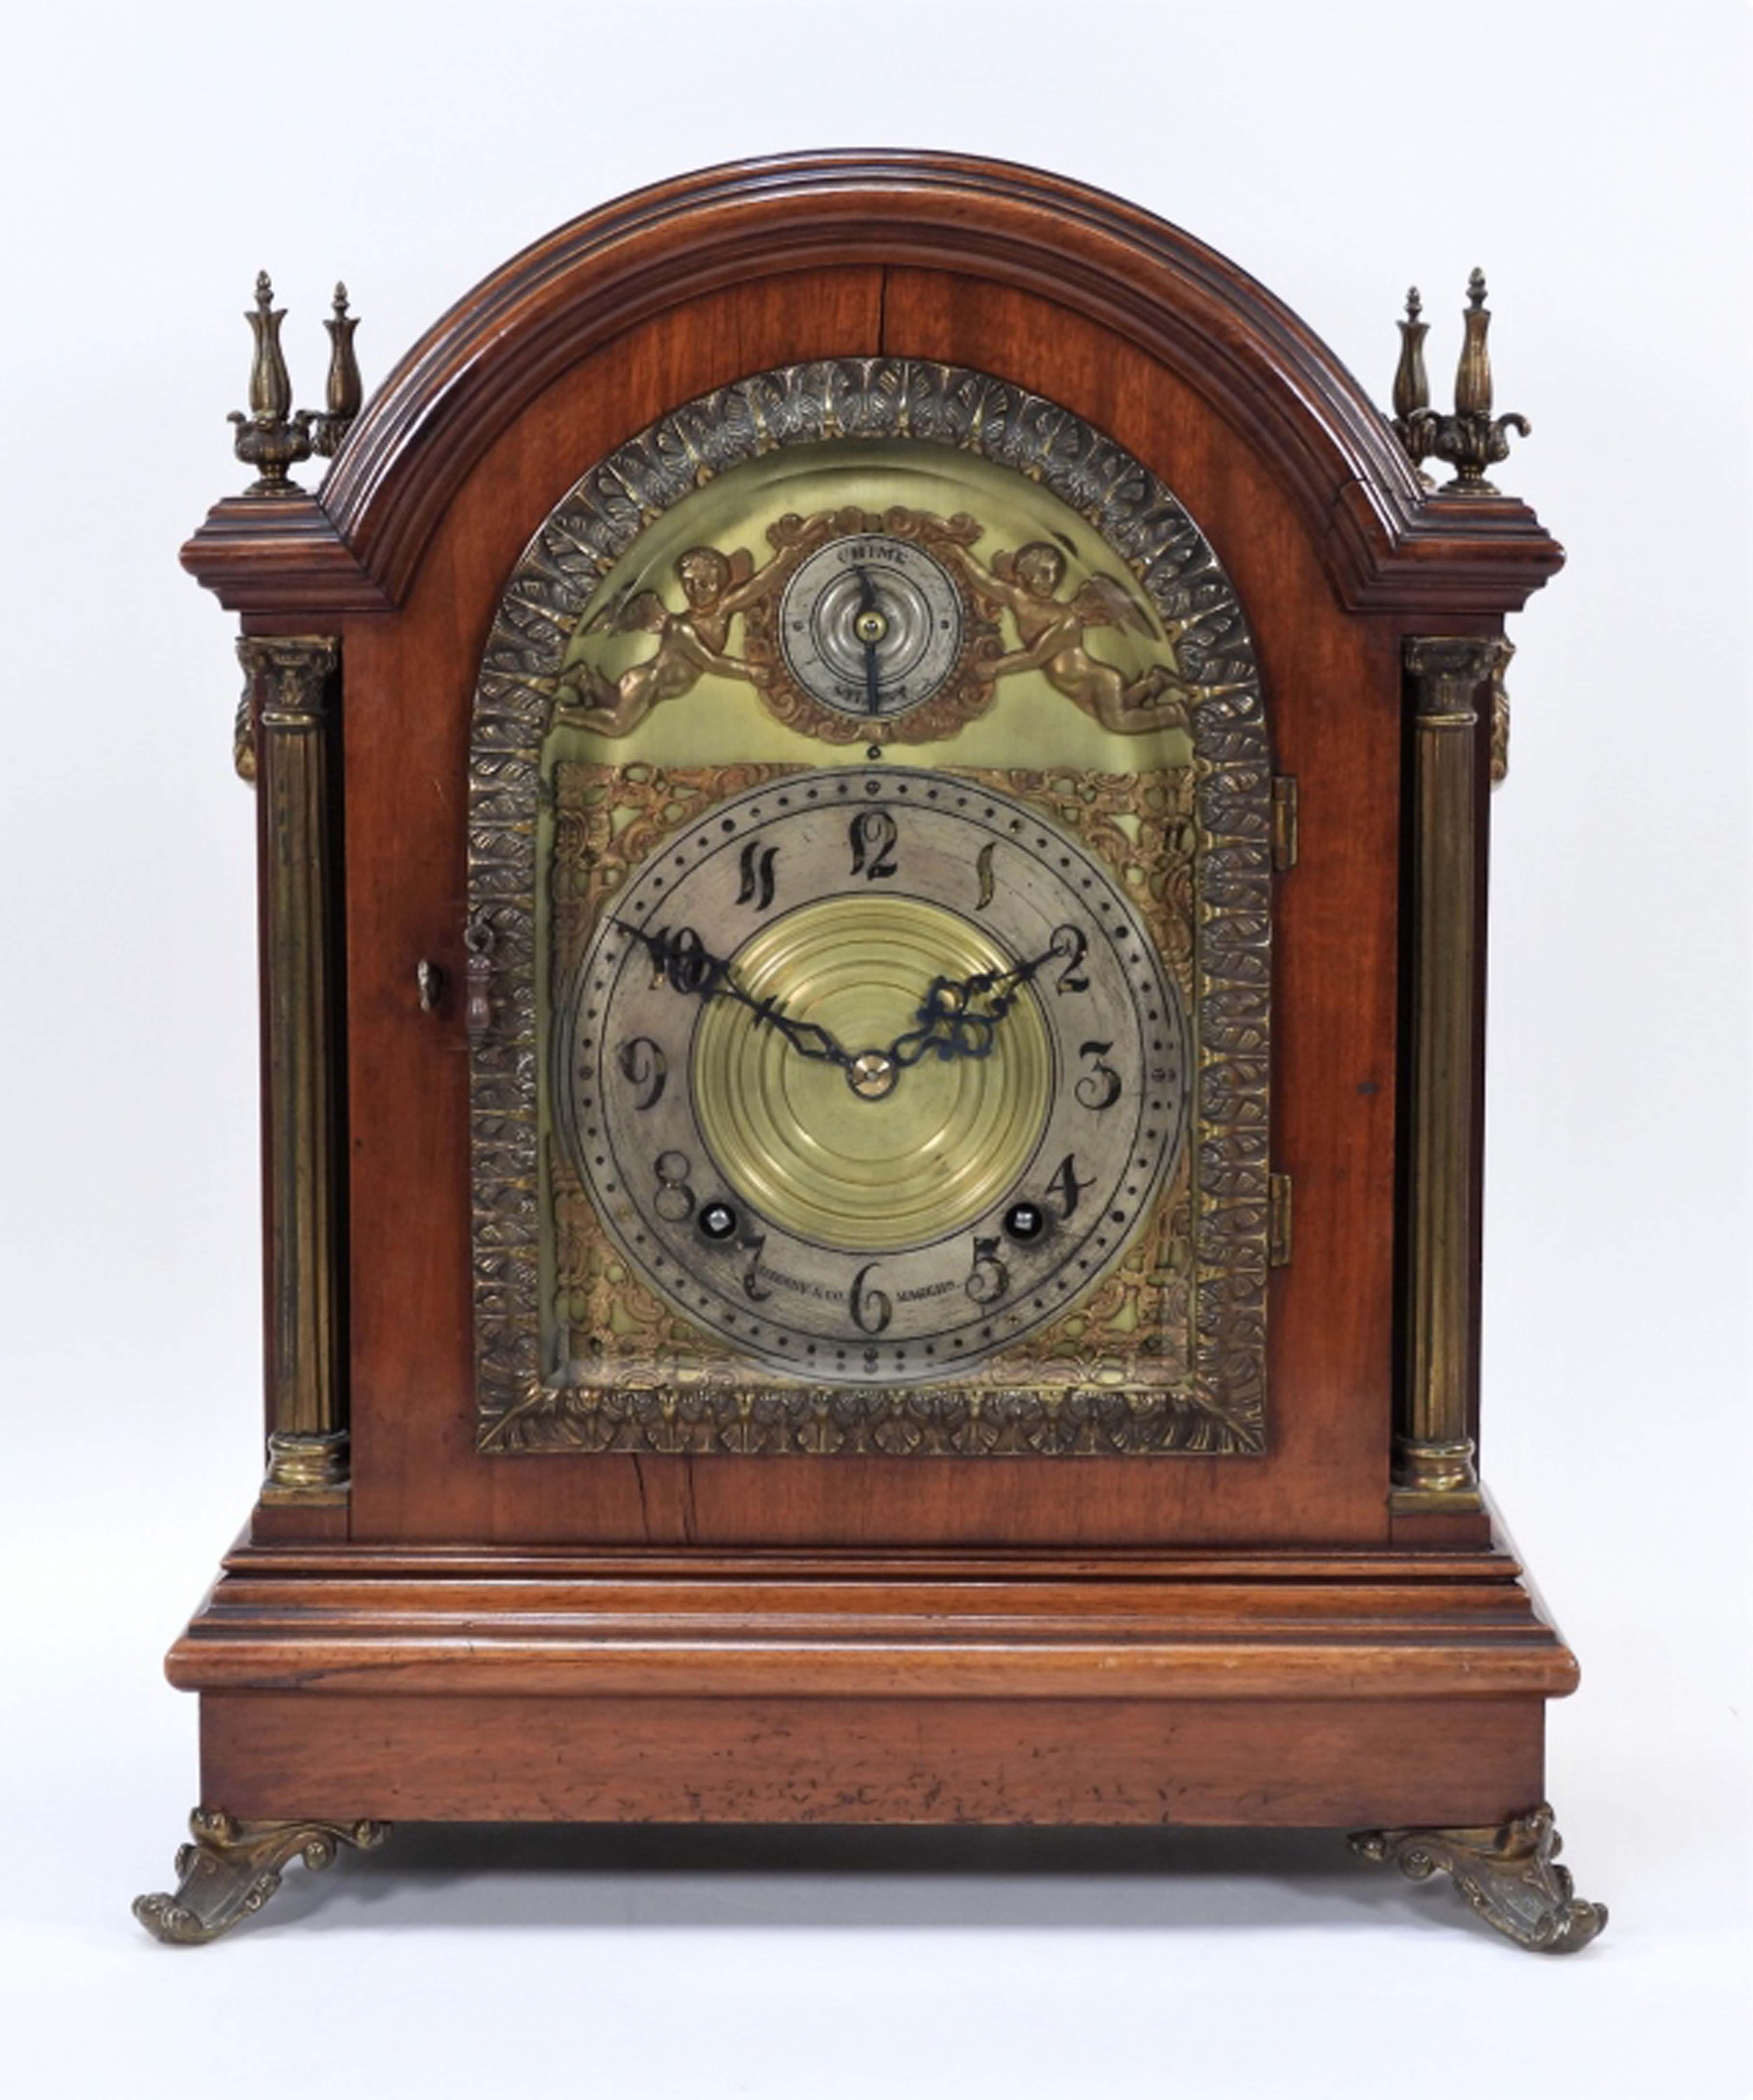 Tiffany & Co. Westminster bracket mantel clock, est. $2,500-$3,500